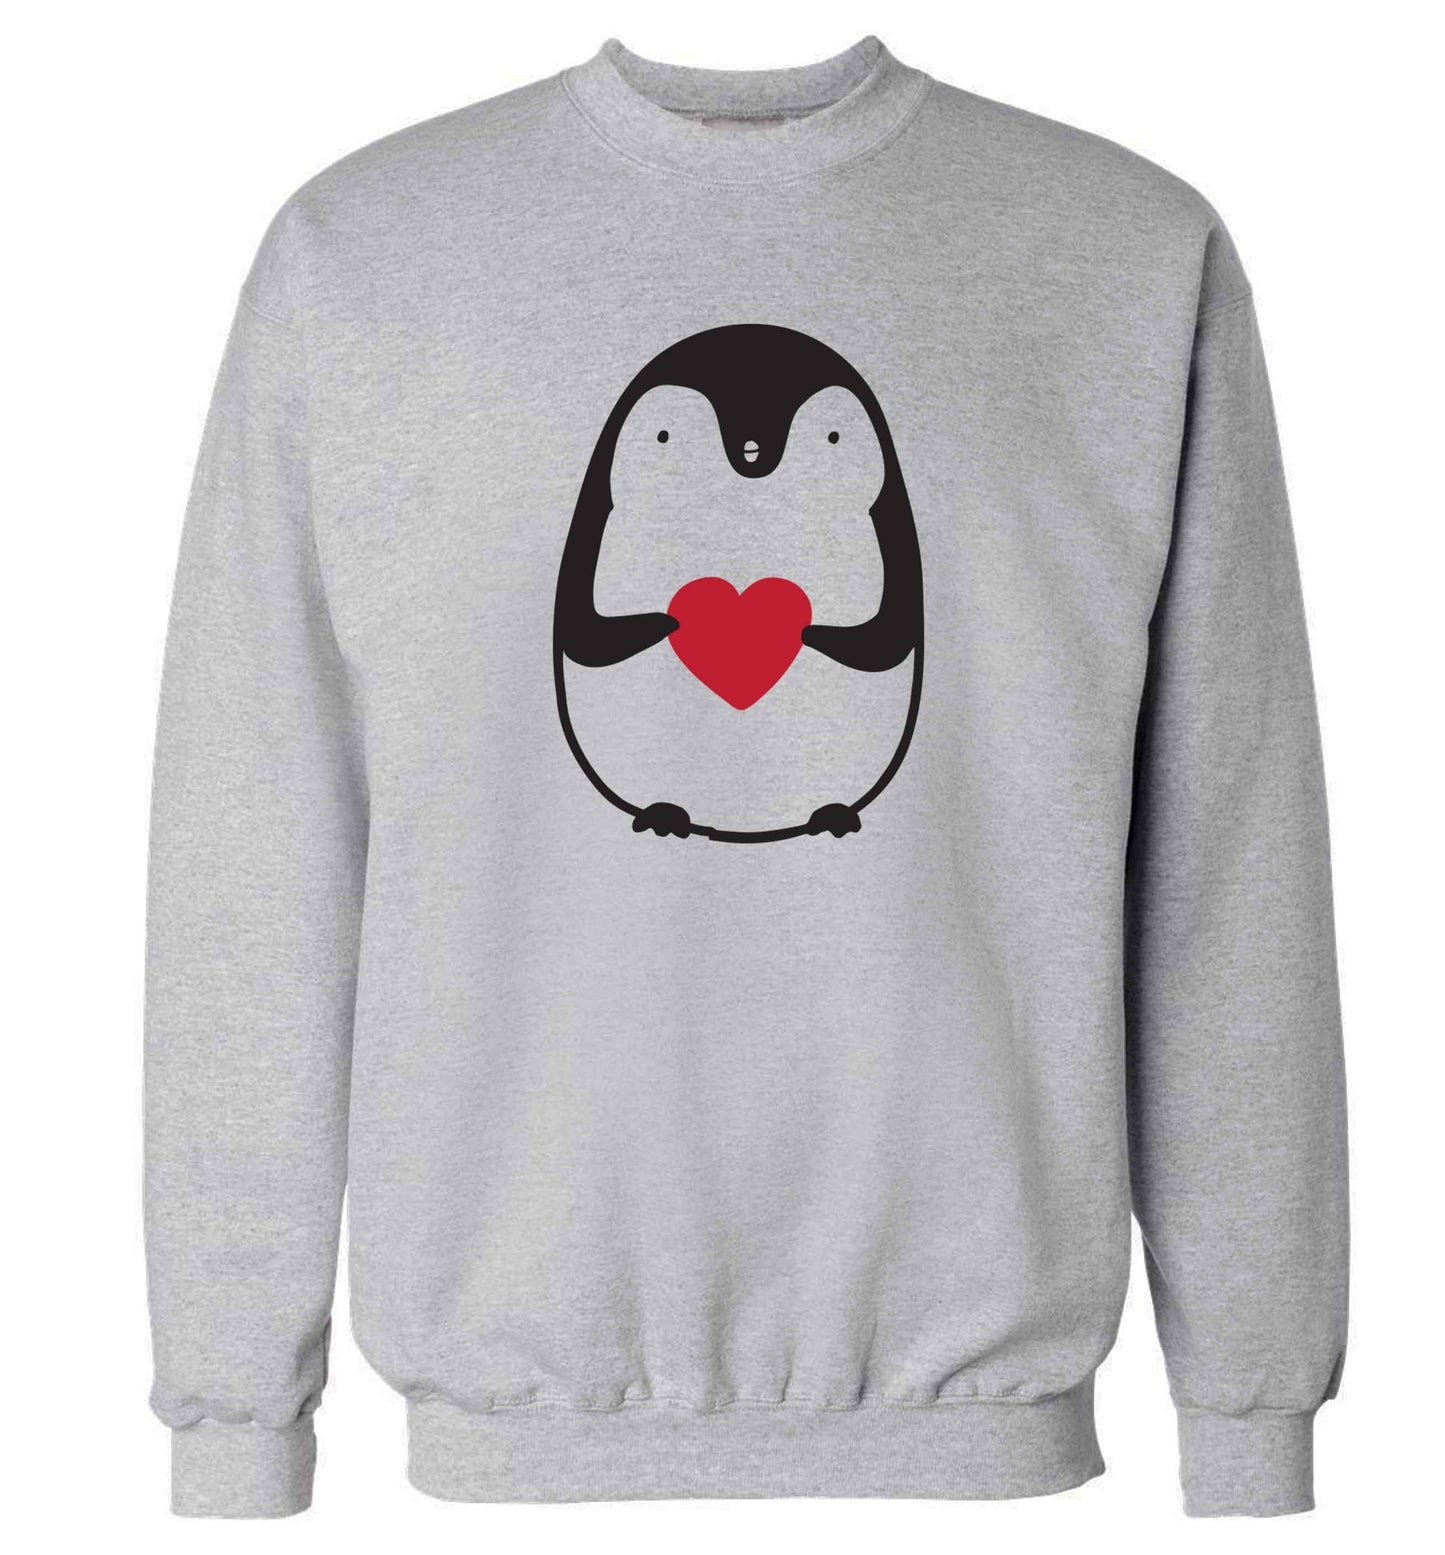 Cute penguin heart adult's unisex grey sweater 2XL